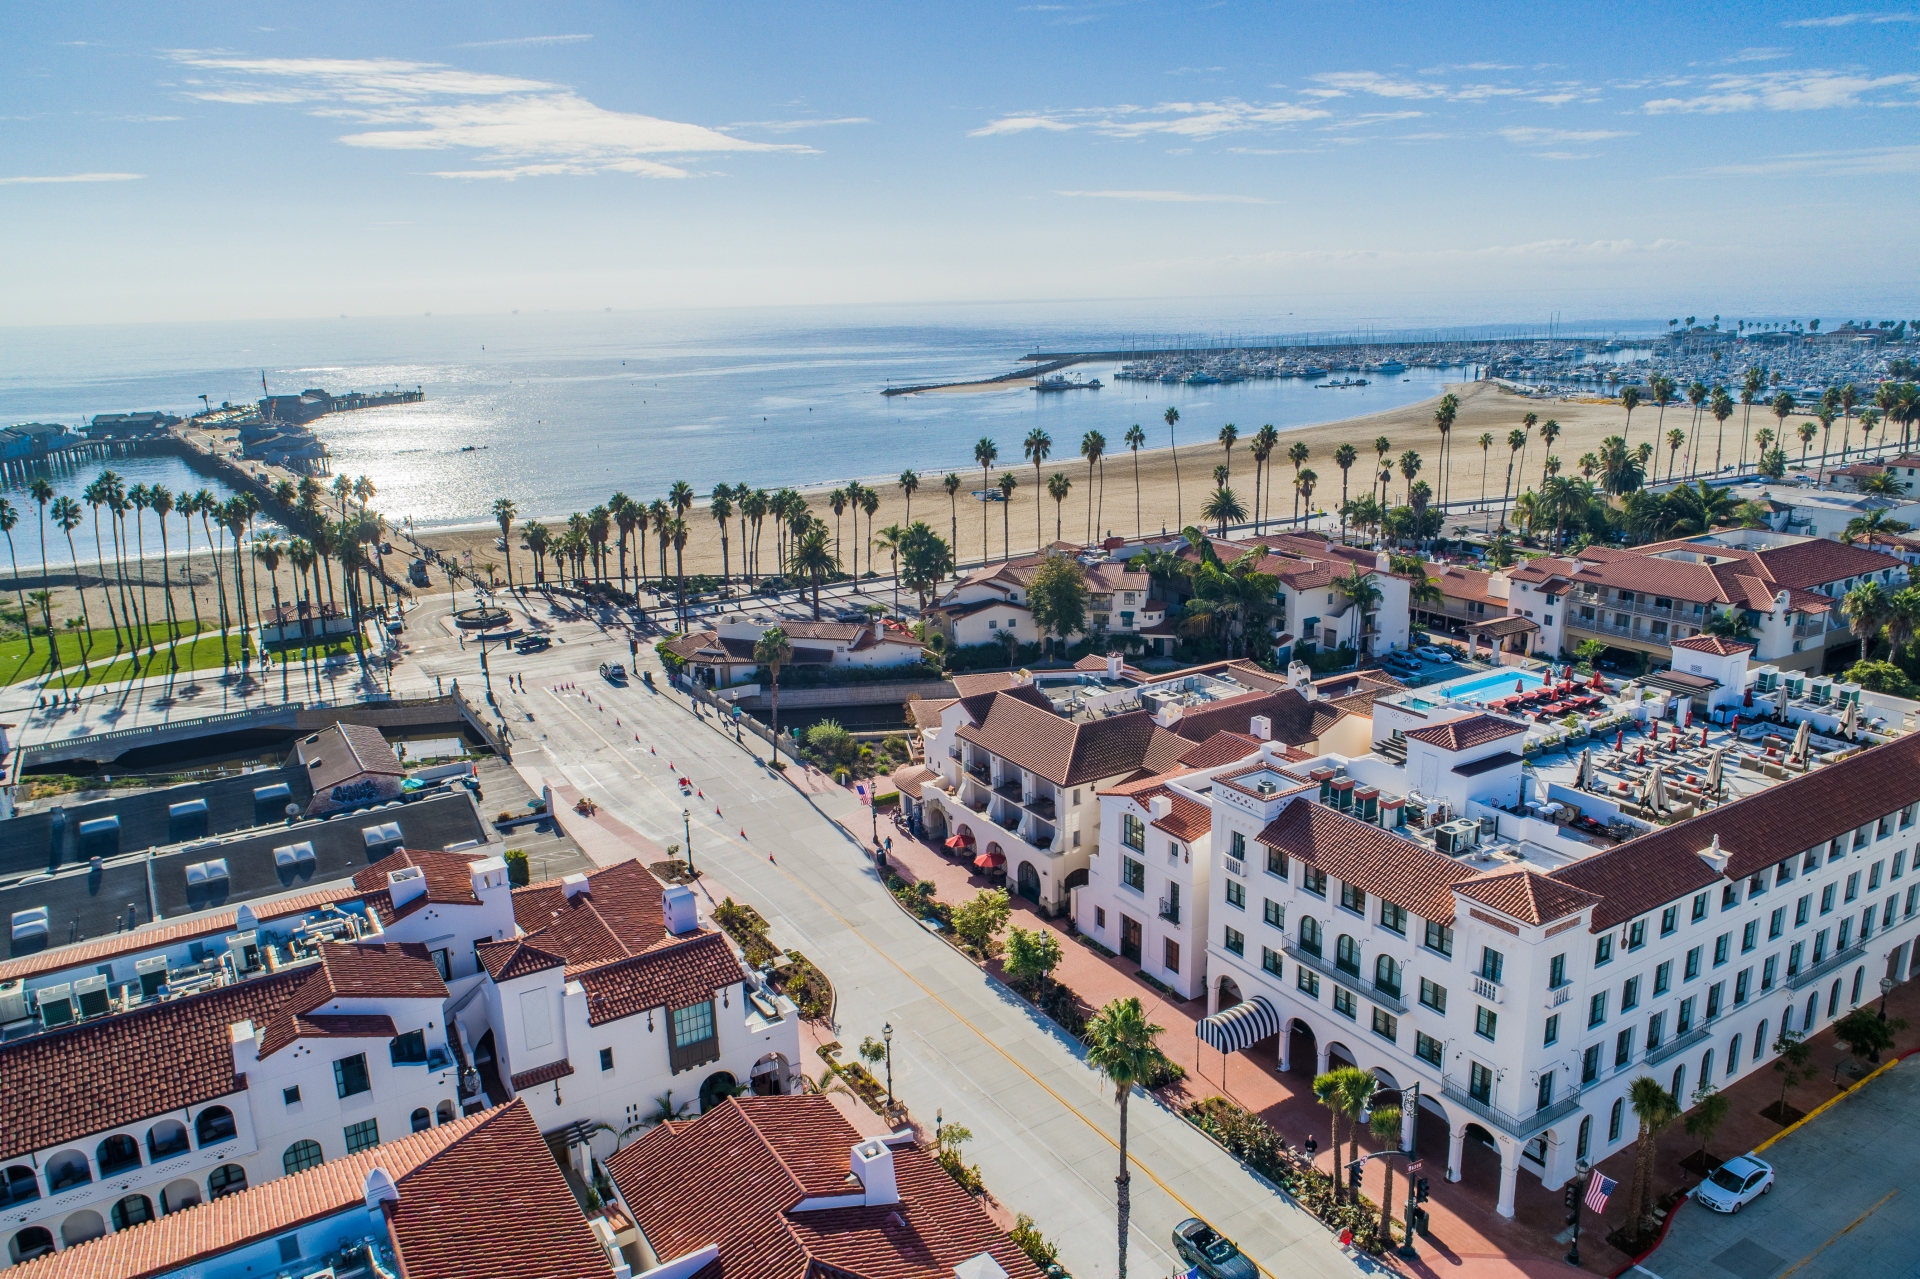 Aerial View of Hotel Californian - Hotel Californian